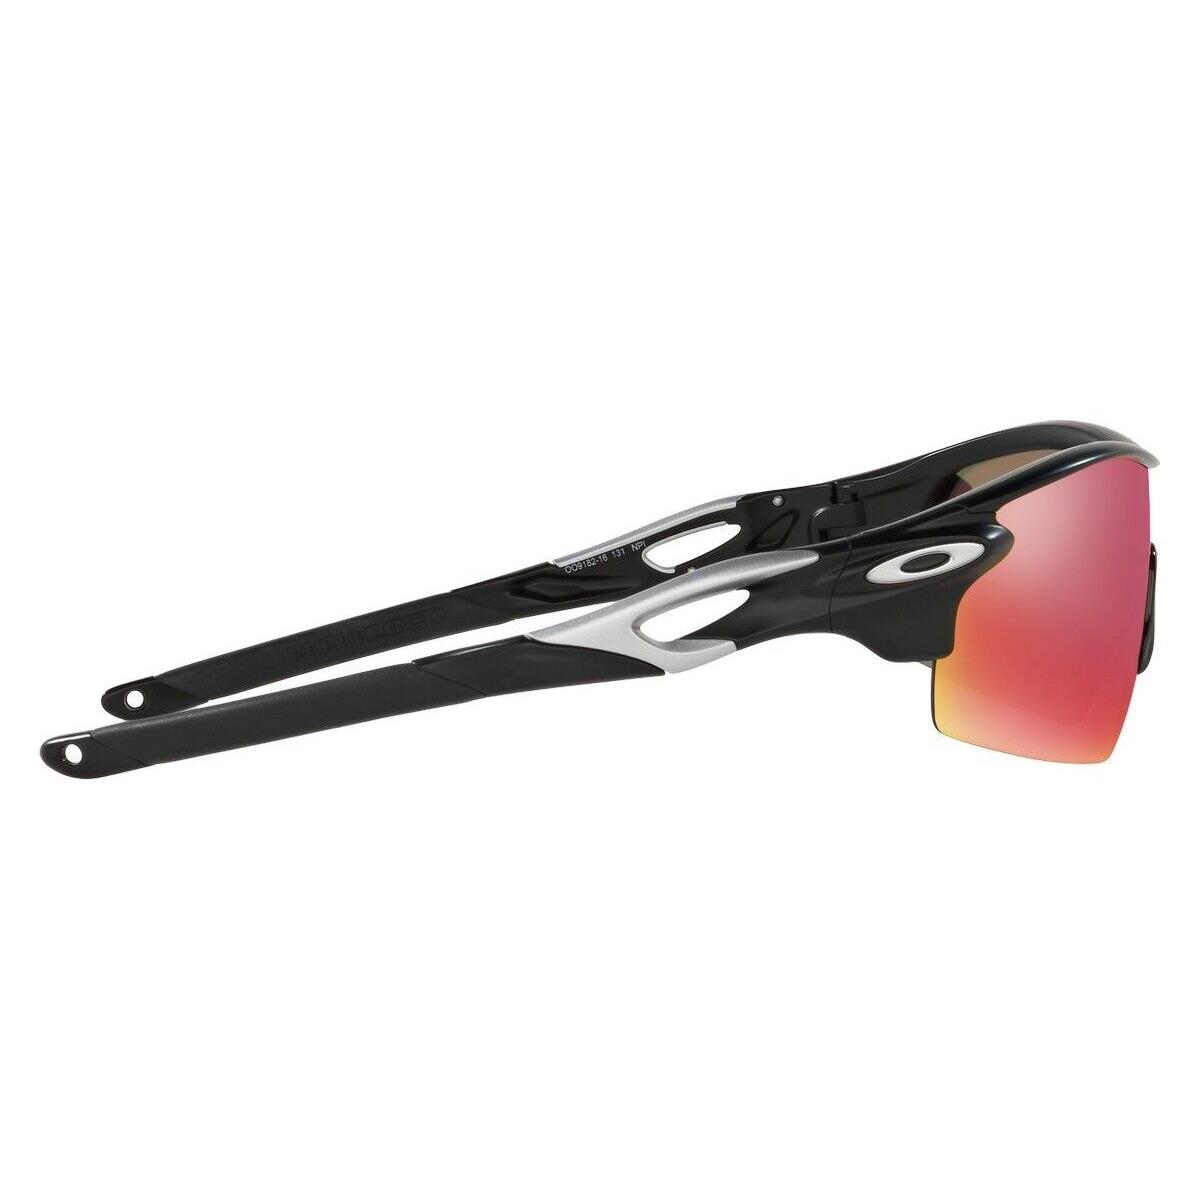 Oakley sunglasses RadarLock Pitch - Matte Black Ink Frame, OO Red Iridium Lens